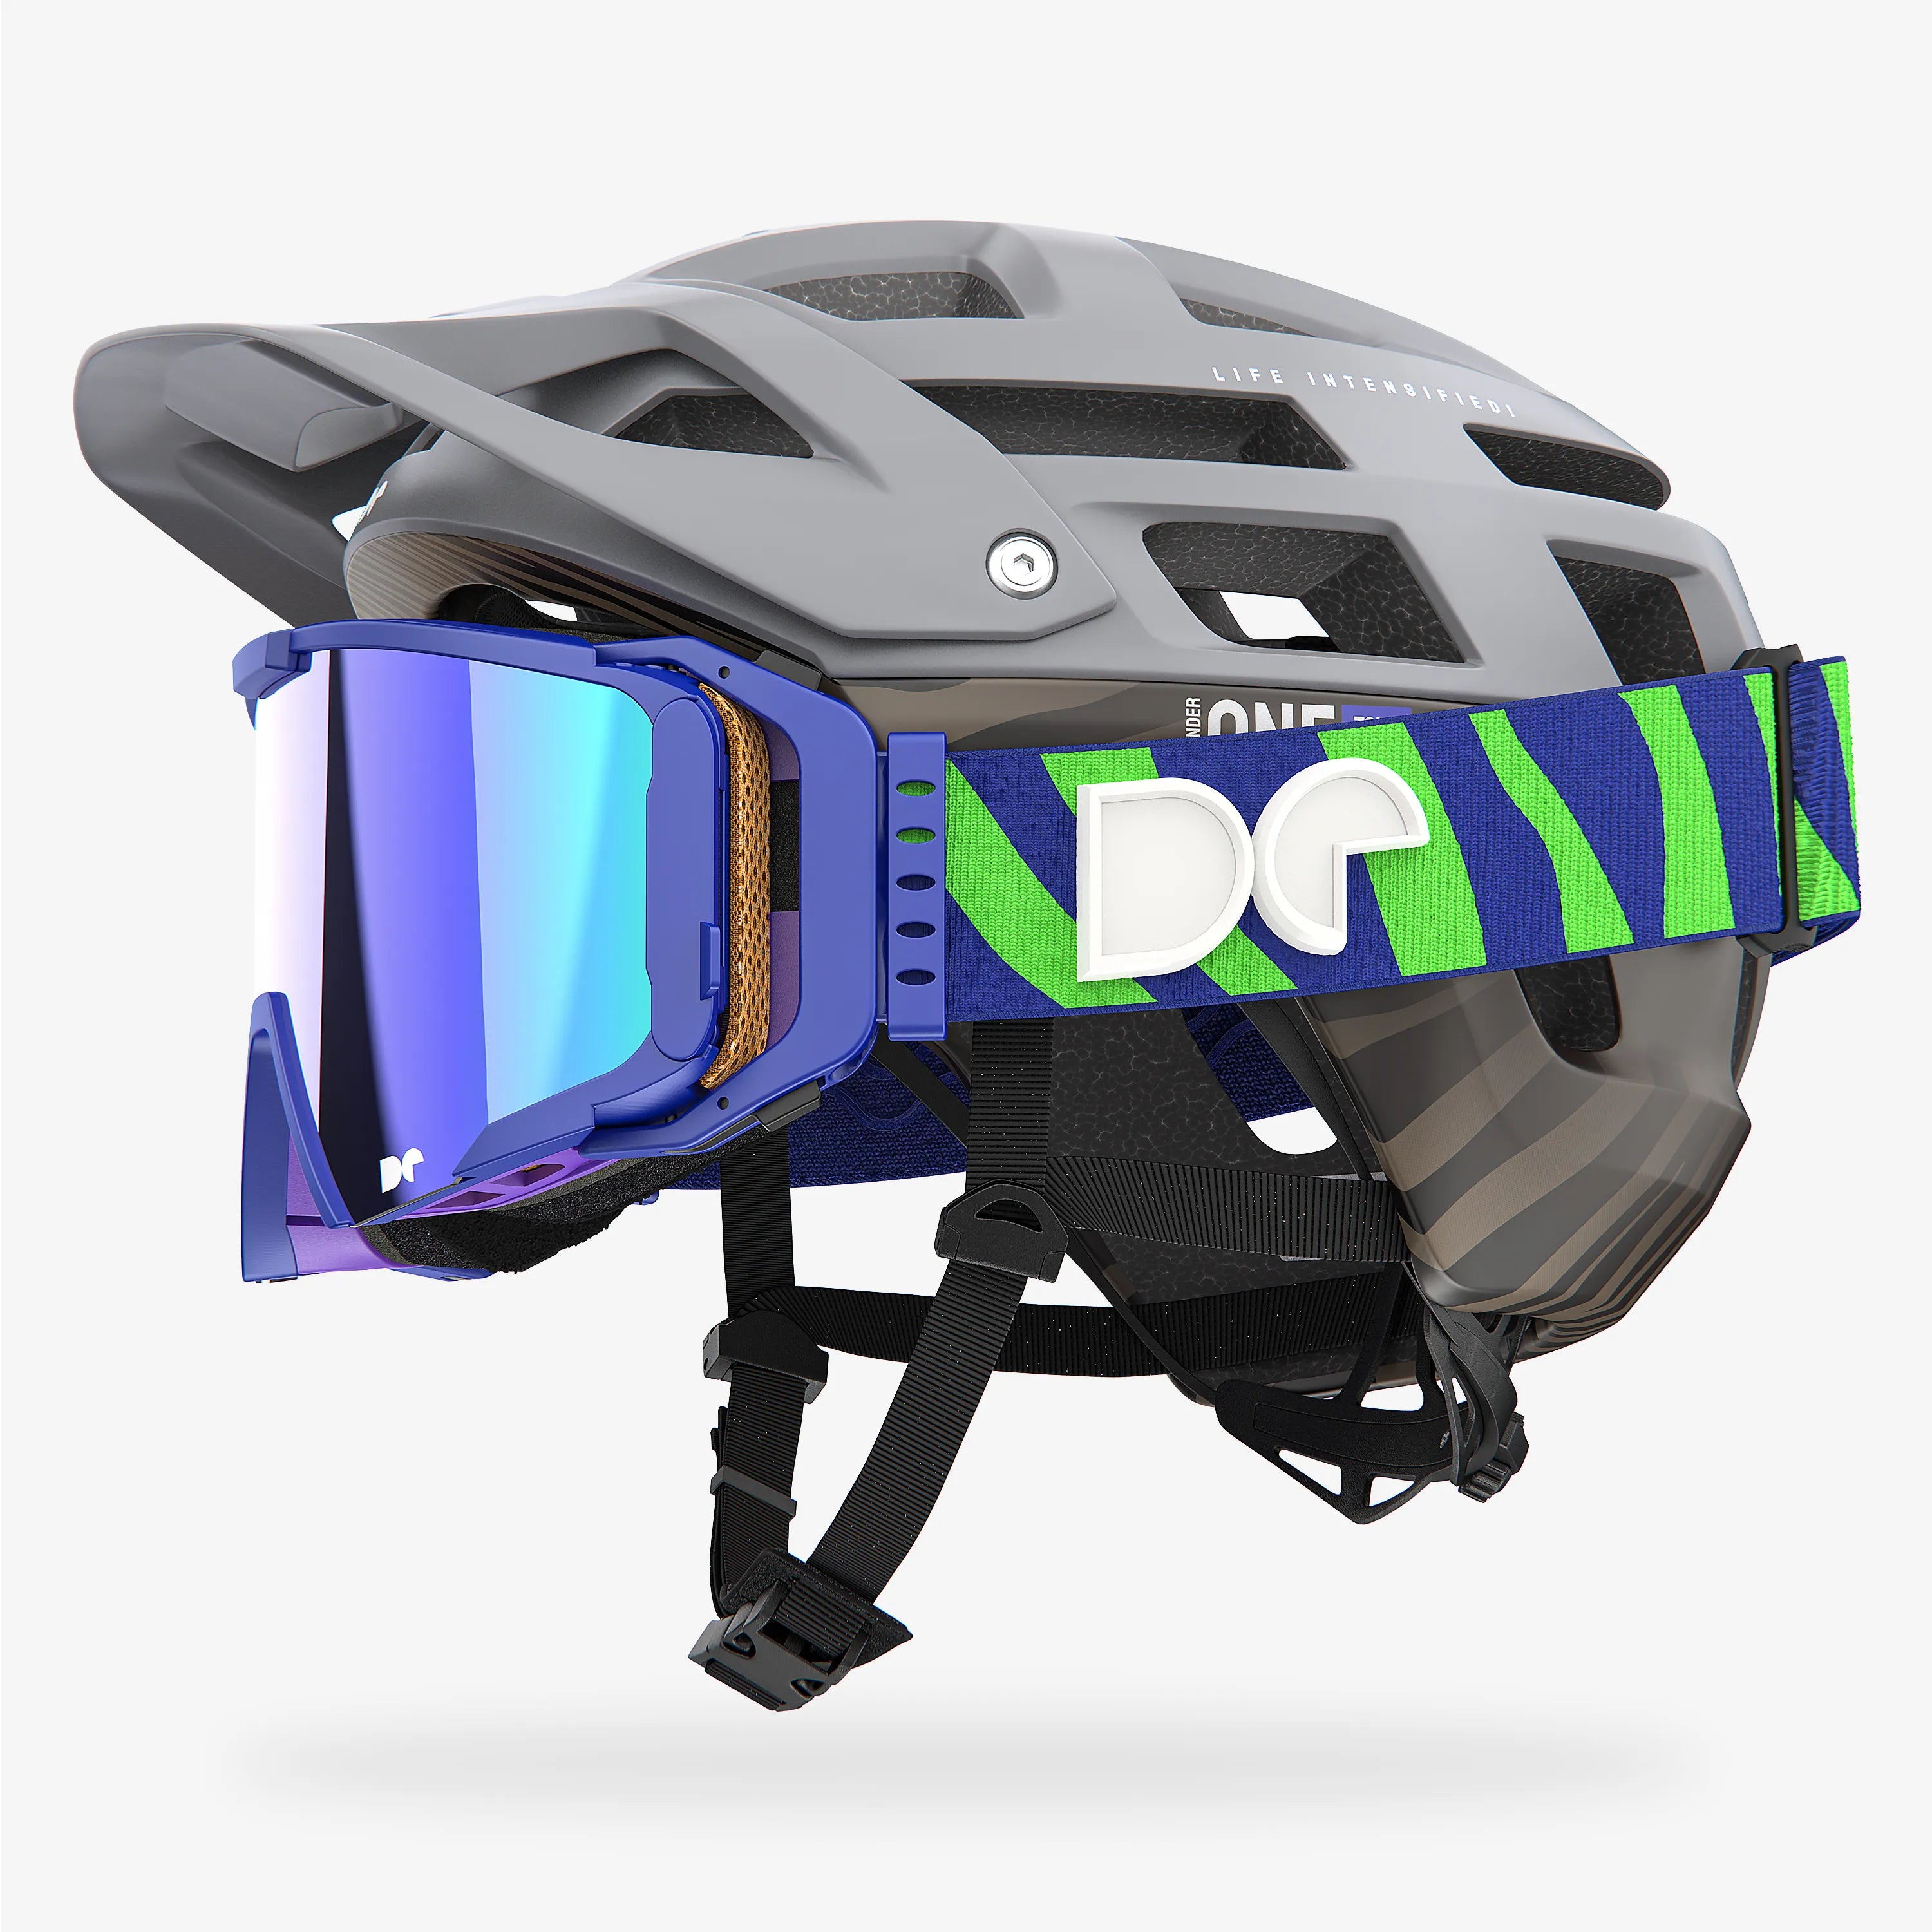 Defender One Tour Nardo Gray Mountain Bike Helmet + Sporter Boostup All Road Goggle